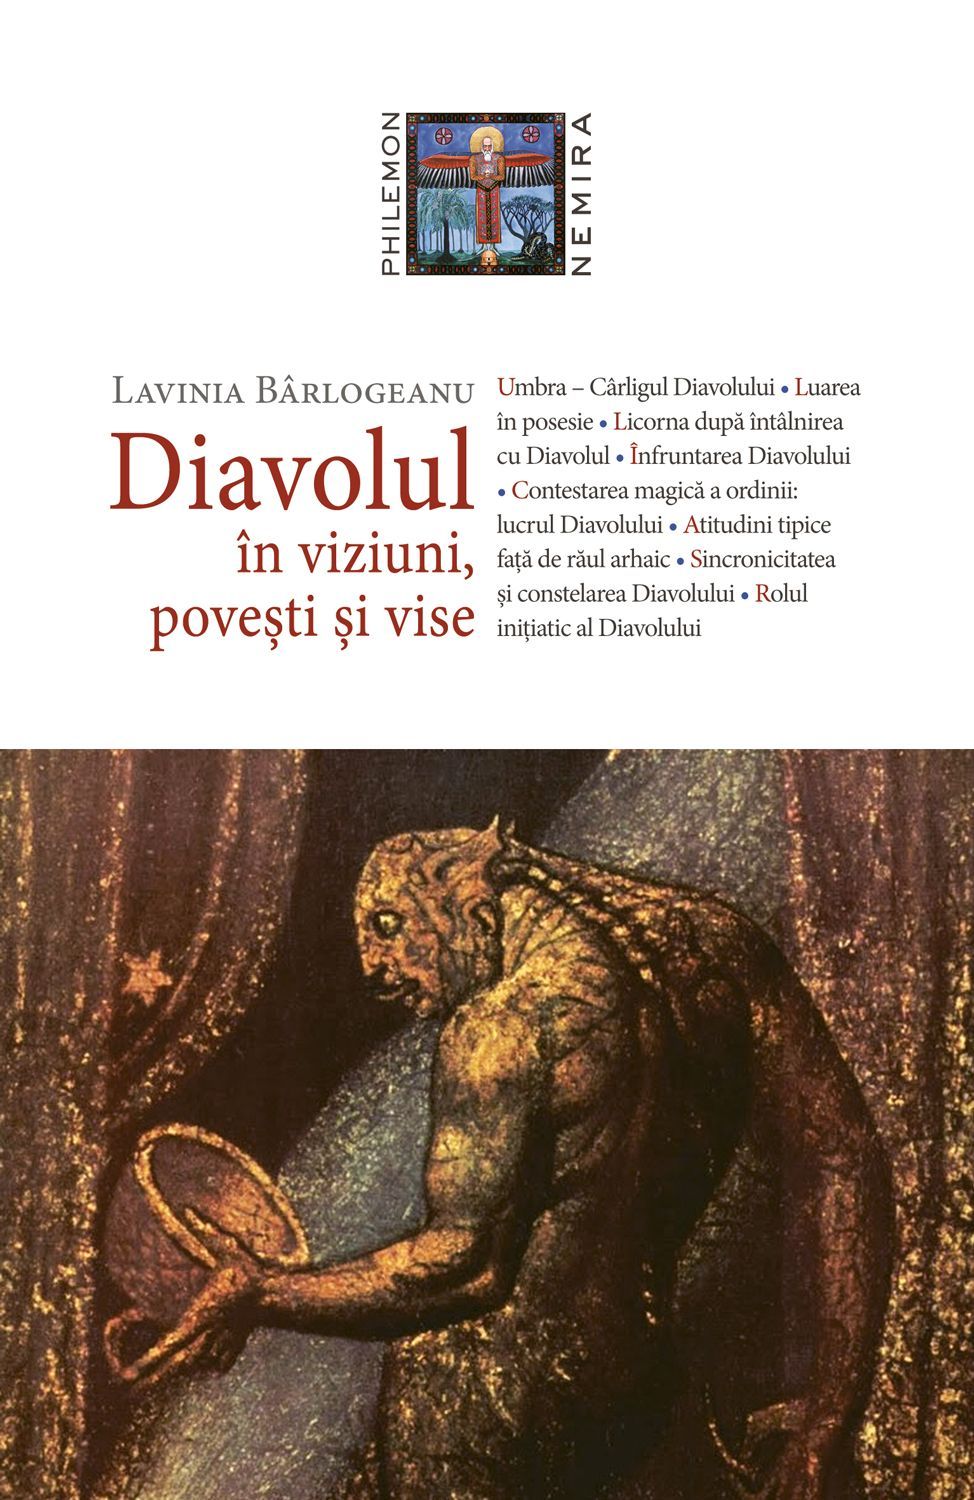 eBook Diavolul in viziuni, povesti si vise - Lavinia Barlogeanu